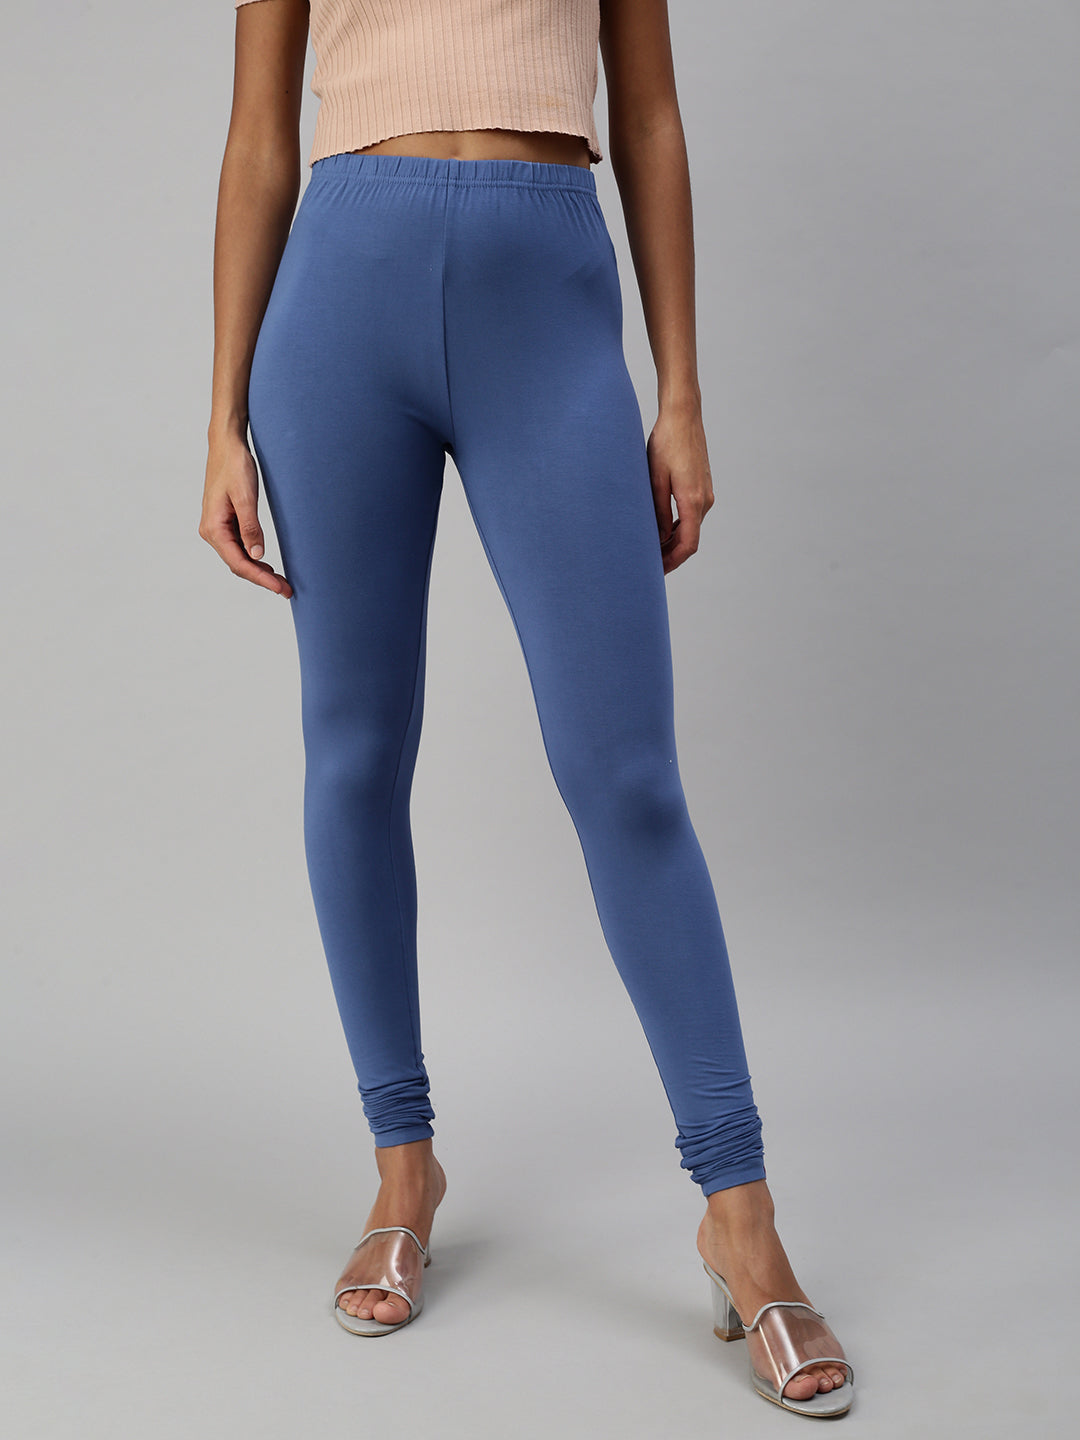 Get Stylish with Prisma's Jean Blue Churidar Leggings